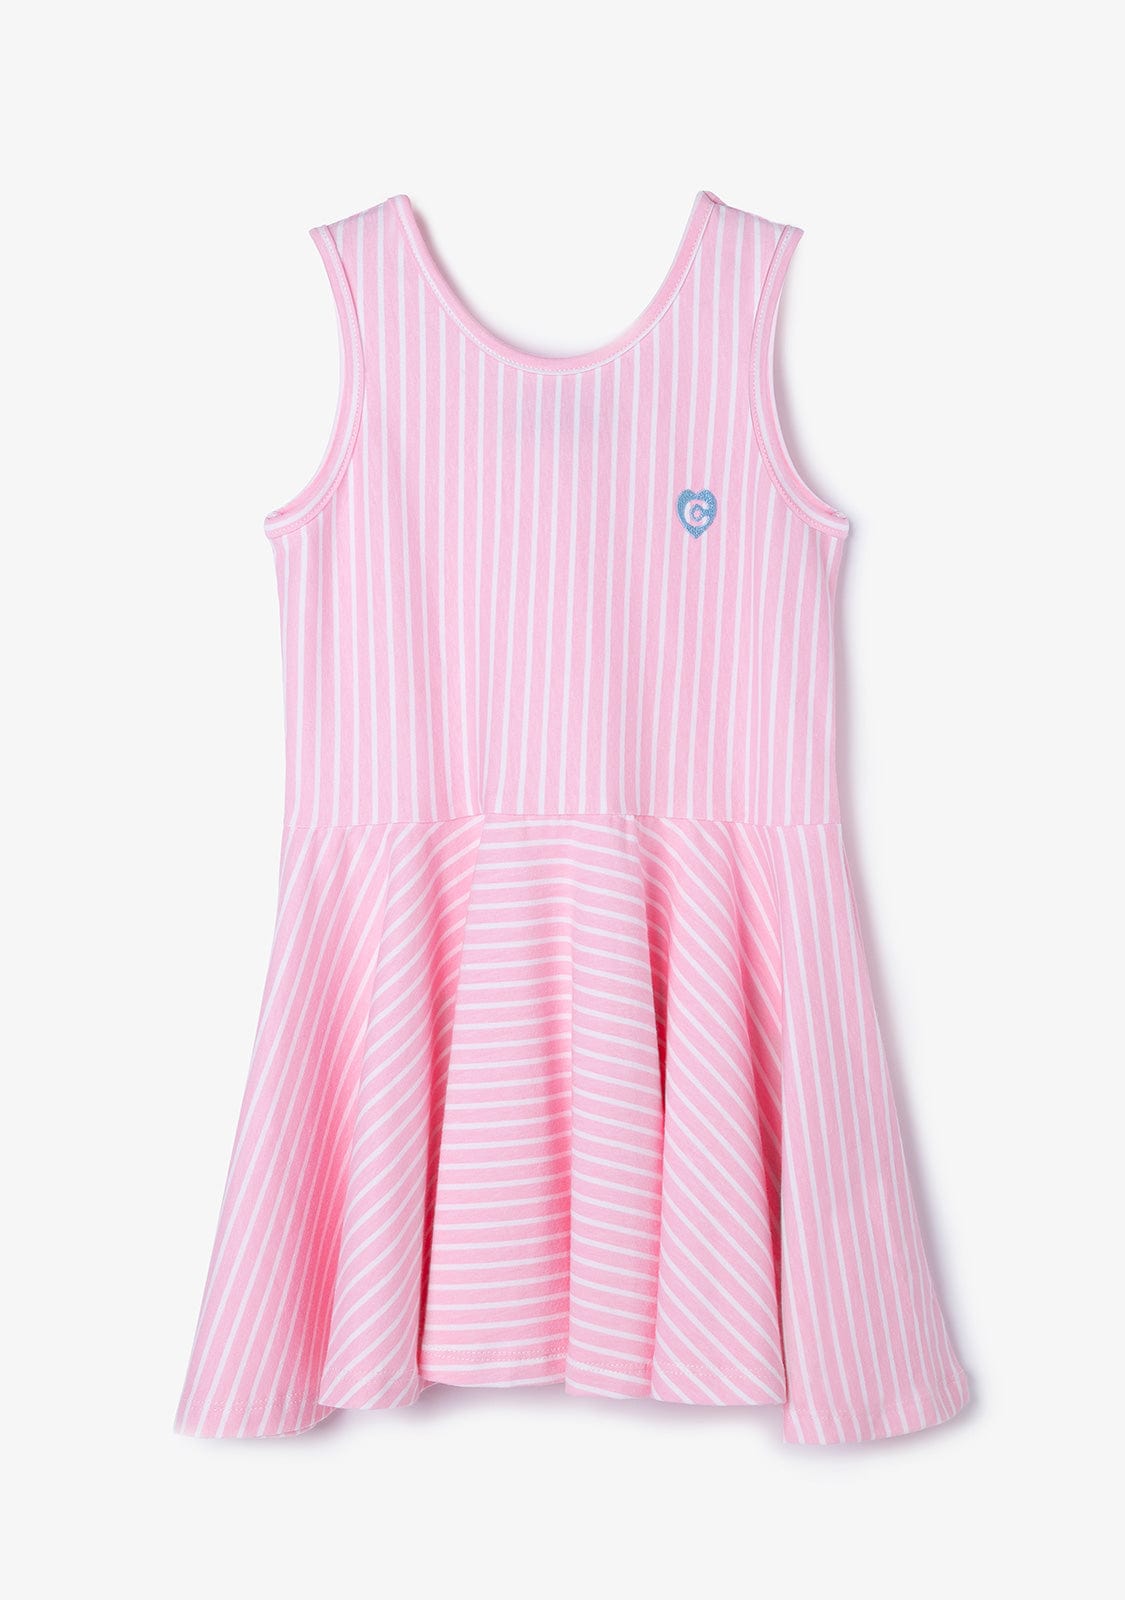 CONGUITOS TEXTIL Clothing Girl's Pink Stripes Logo Skater Dress